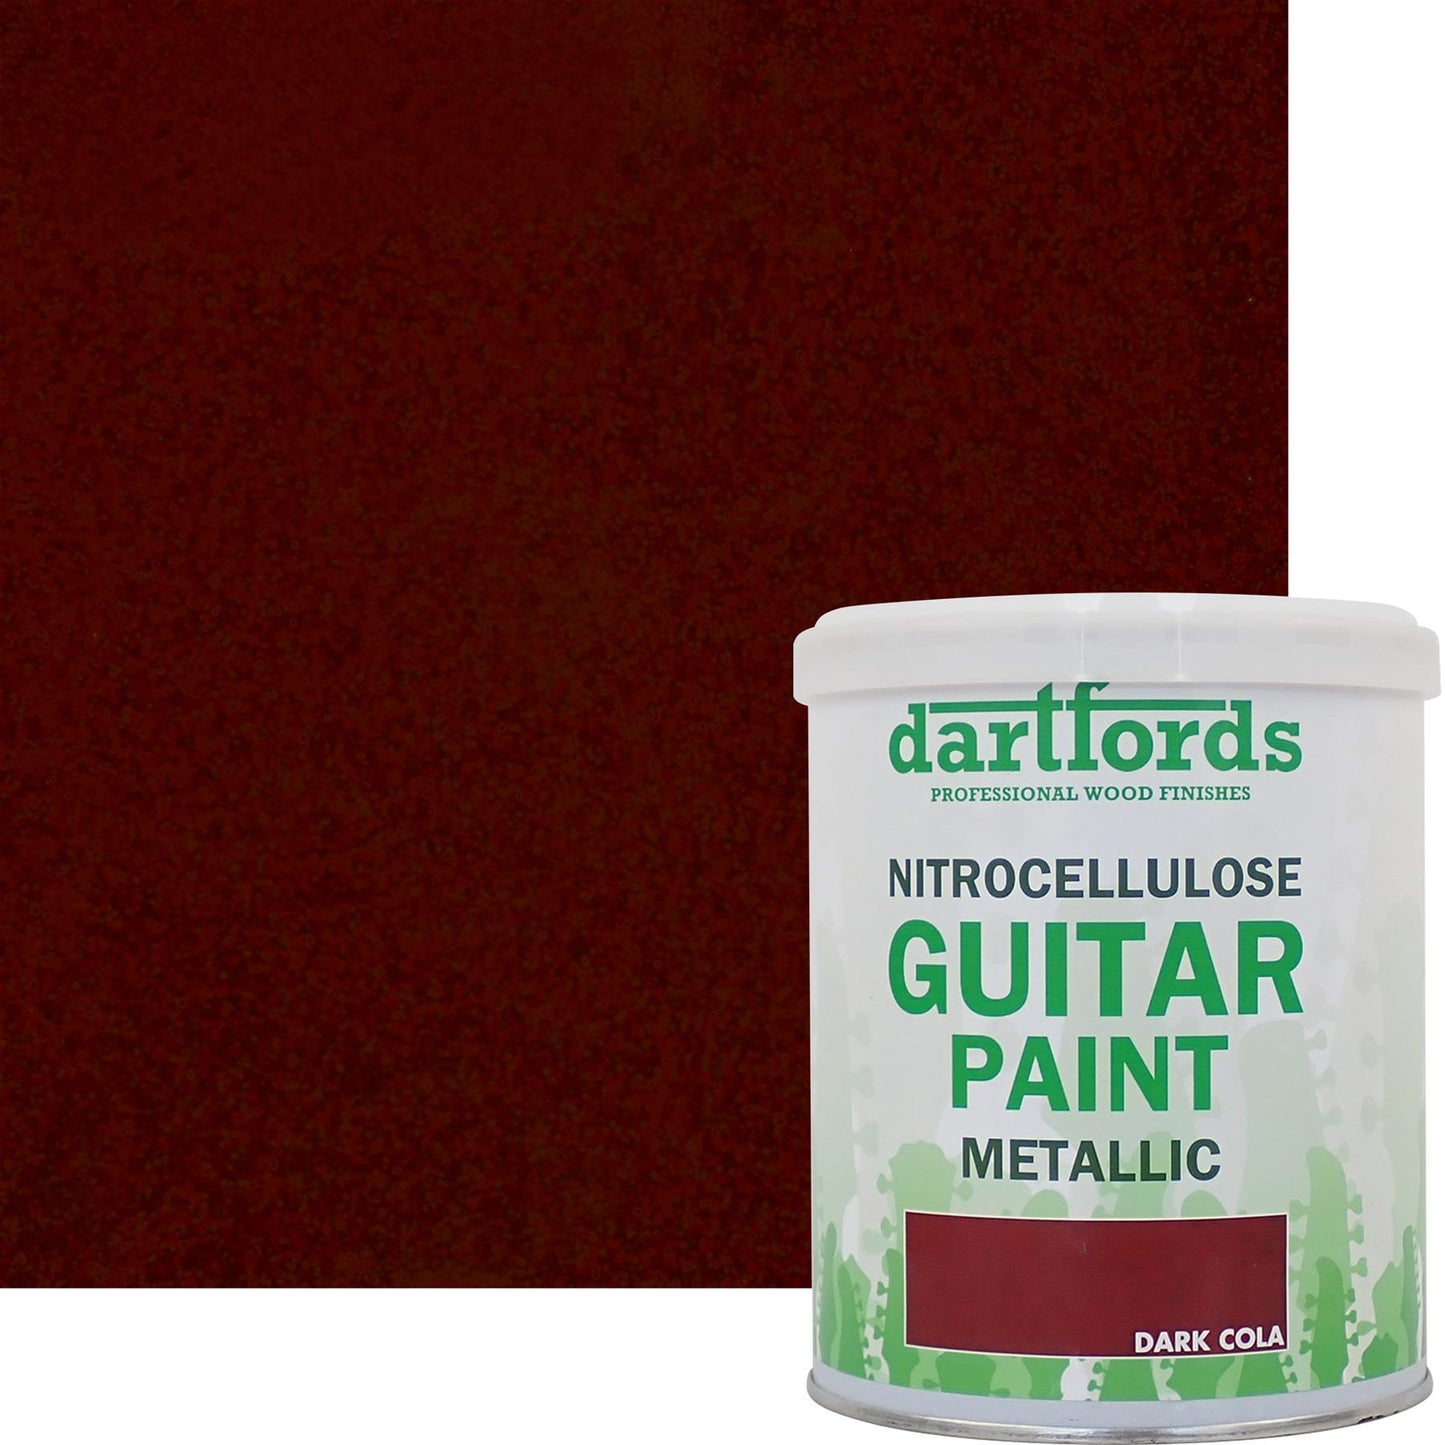 dartfords Dark Cola Metallic Nitrocellulose Guitar Paint - 1 litre Tin